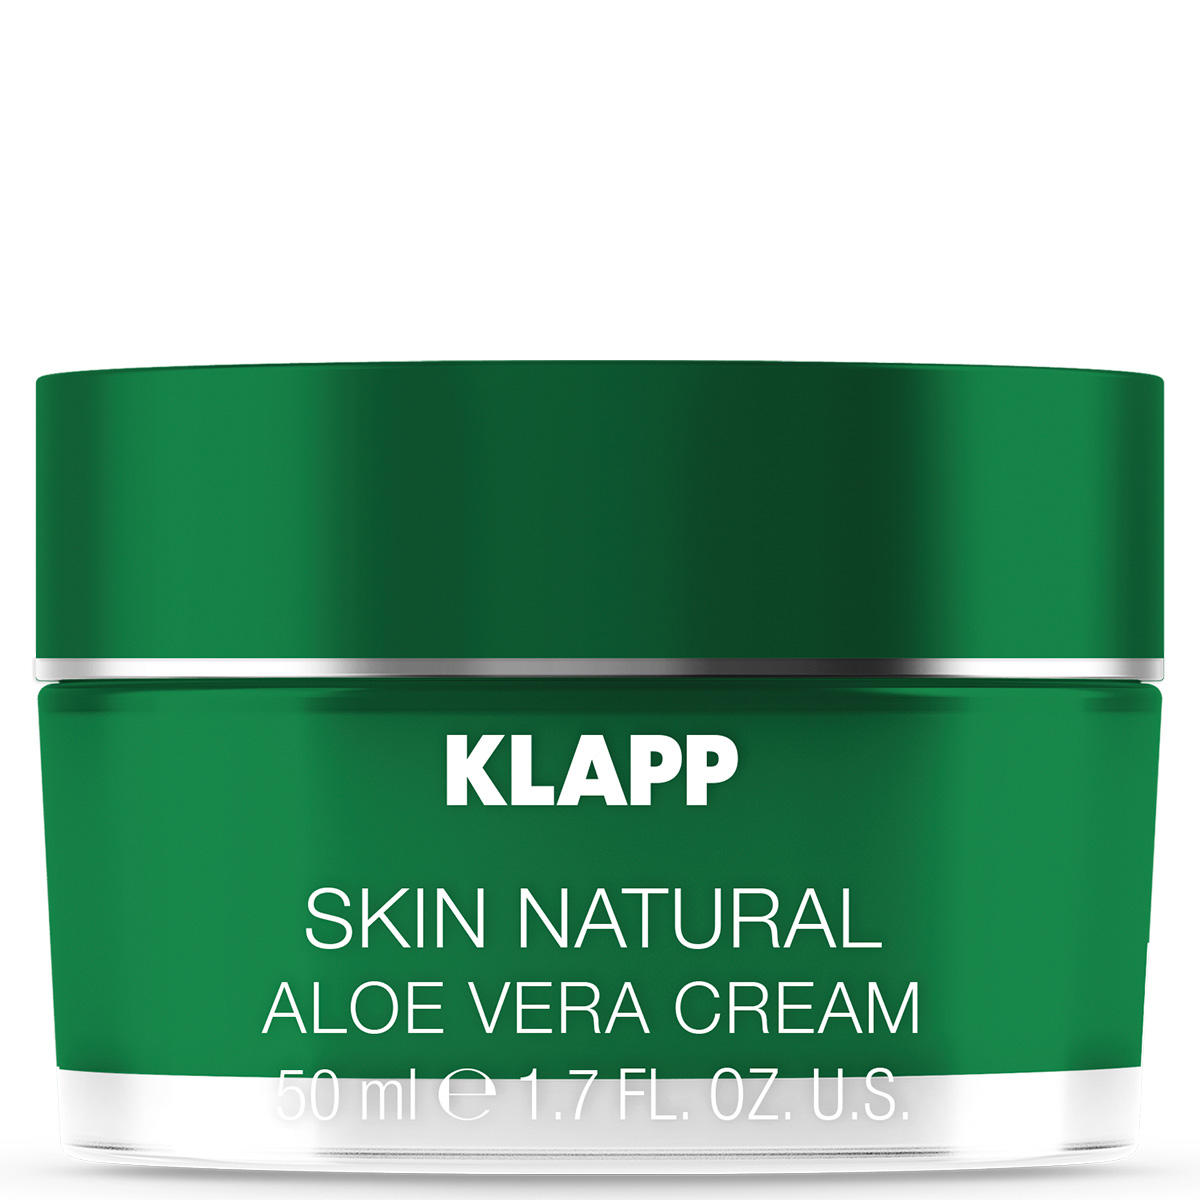 KLAPP SKIN NATURAL Aloe Vera Cream 50 ml - 1